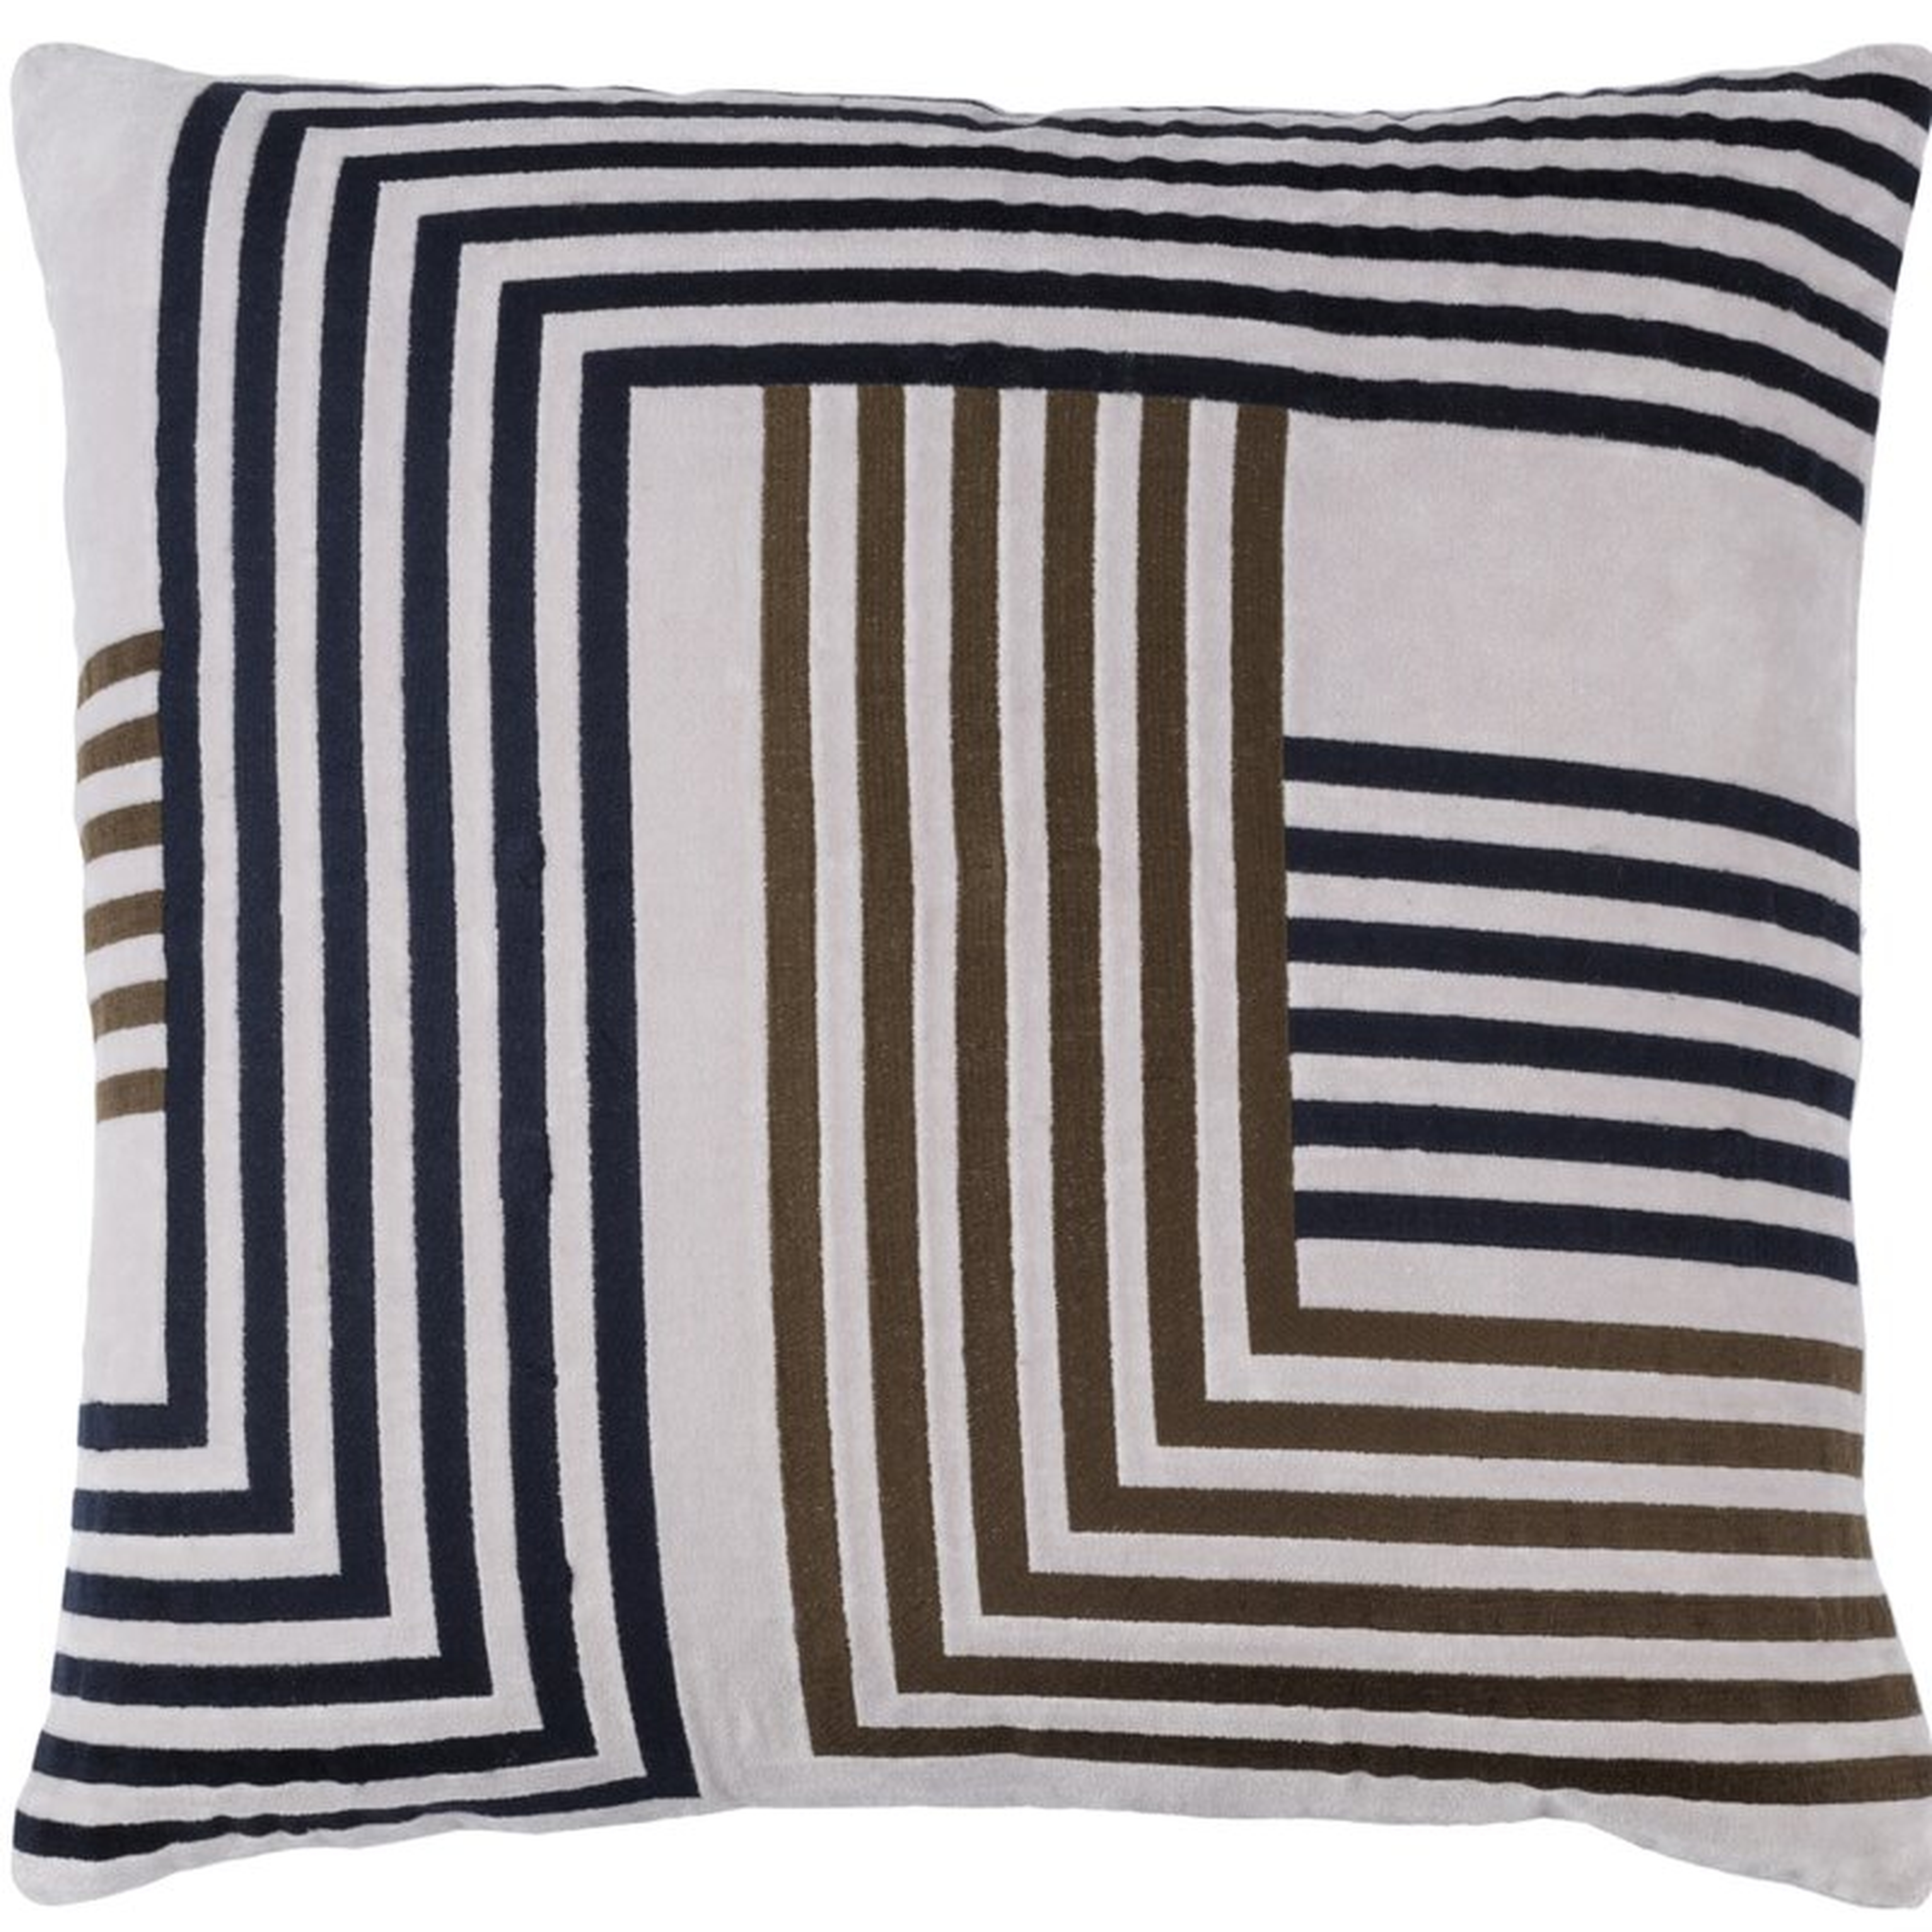 Surya Intermezzo Cotton Throw Pillow Size: 18" H x 18" W x 4" D, Color: Light Gray / Dark Brown / Navy - Perigold